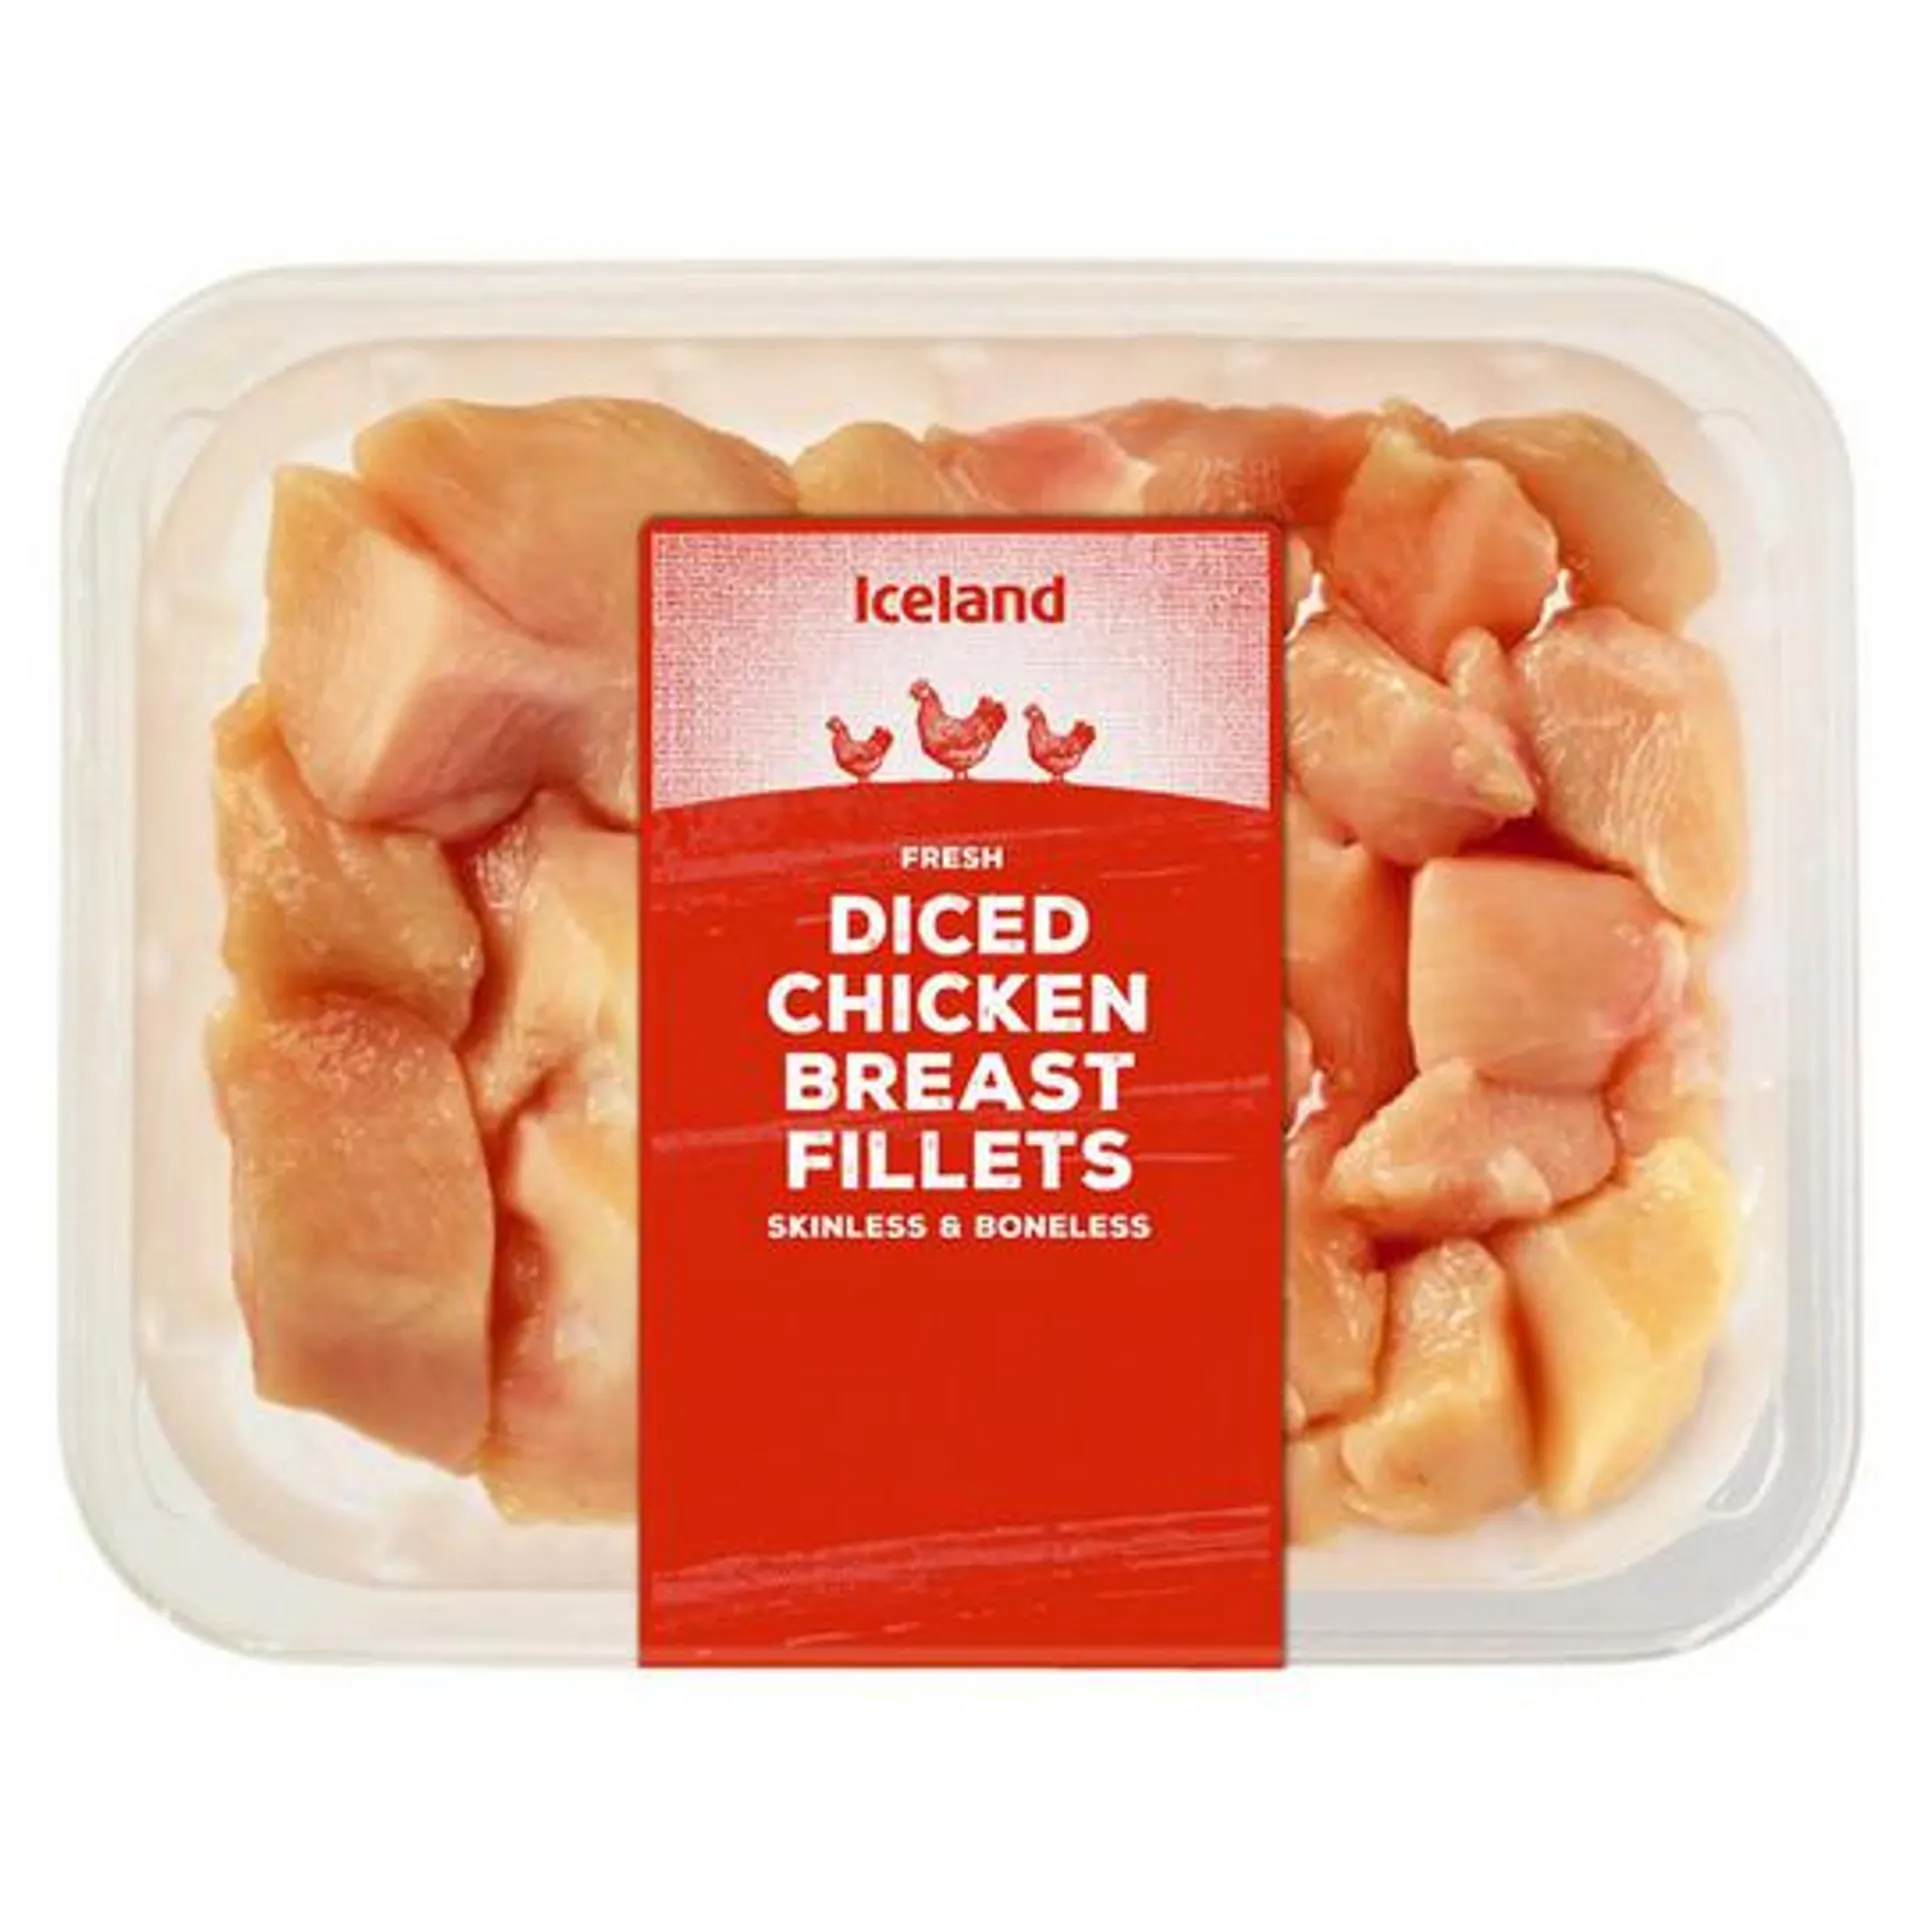 Iceland Fresh Diced Chicken Breast Fillets Skinless & Boneless 425g